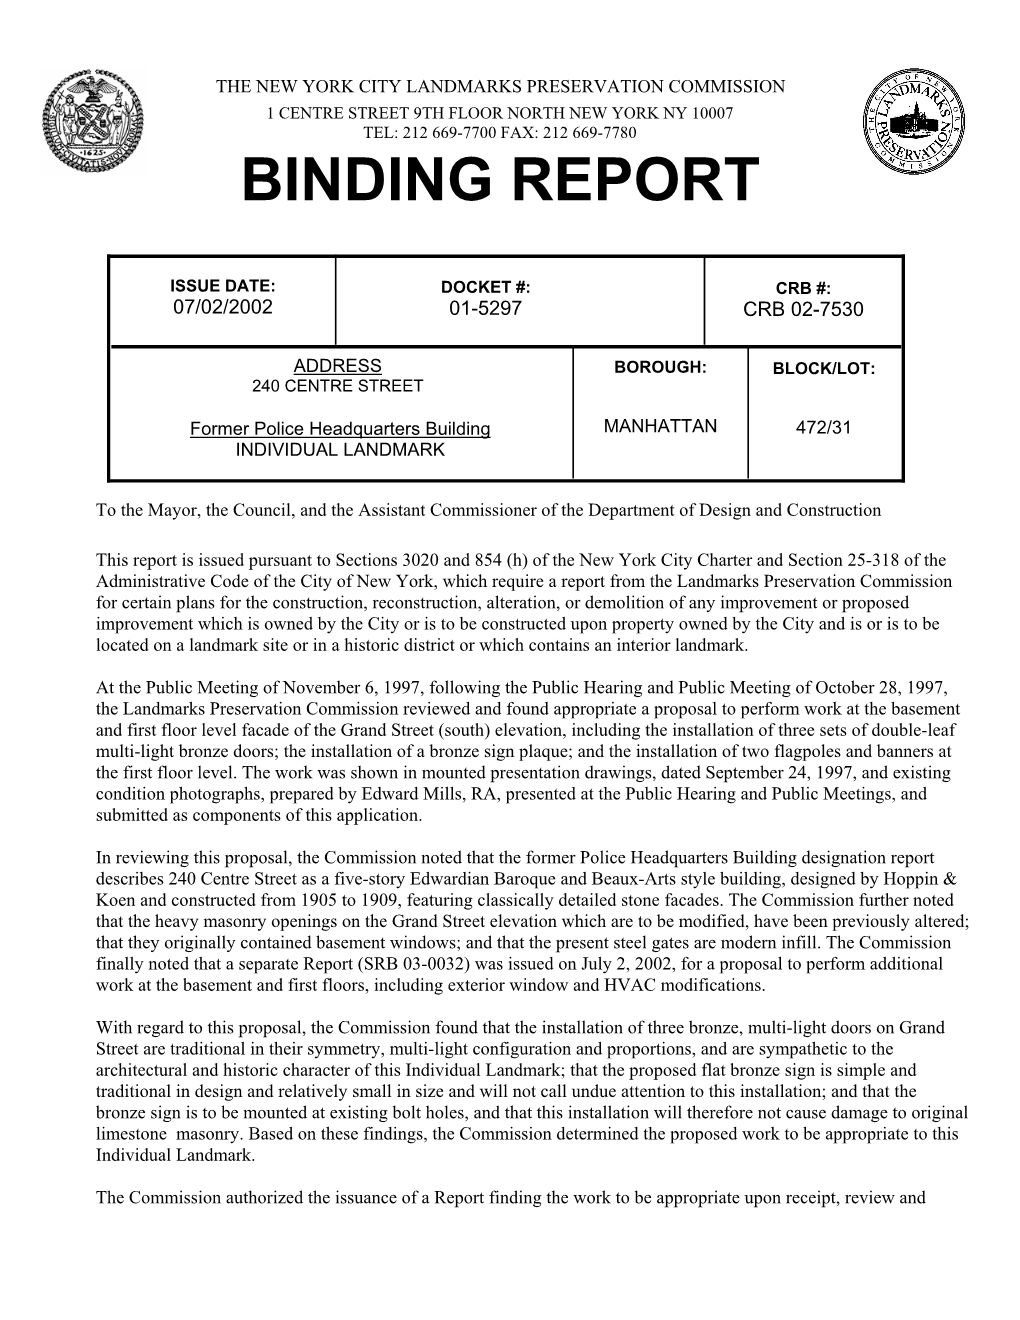 Binding Report for 240 Centre Street, Manhattan Docket 01-5297